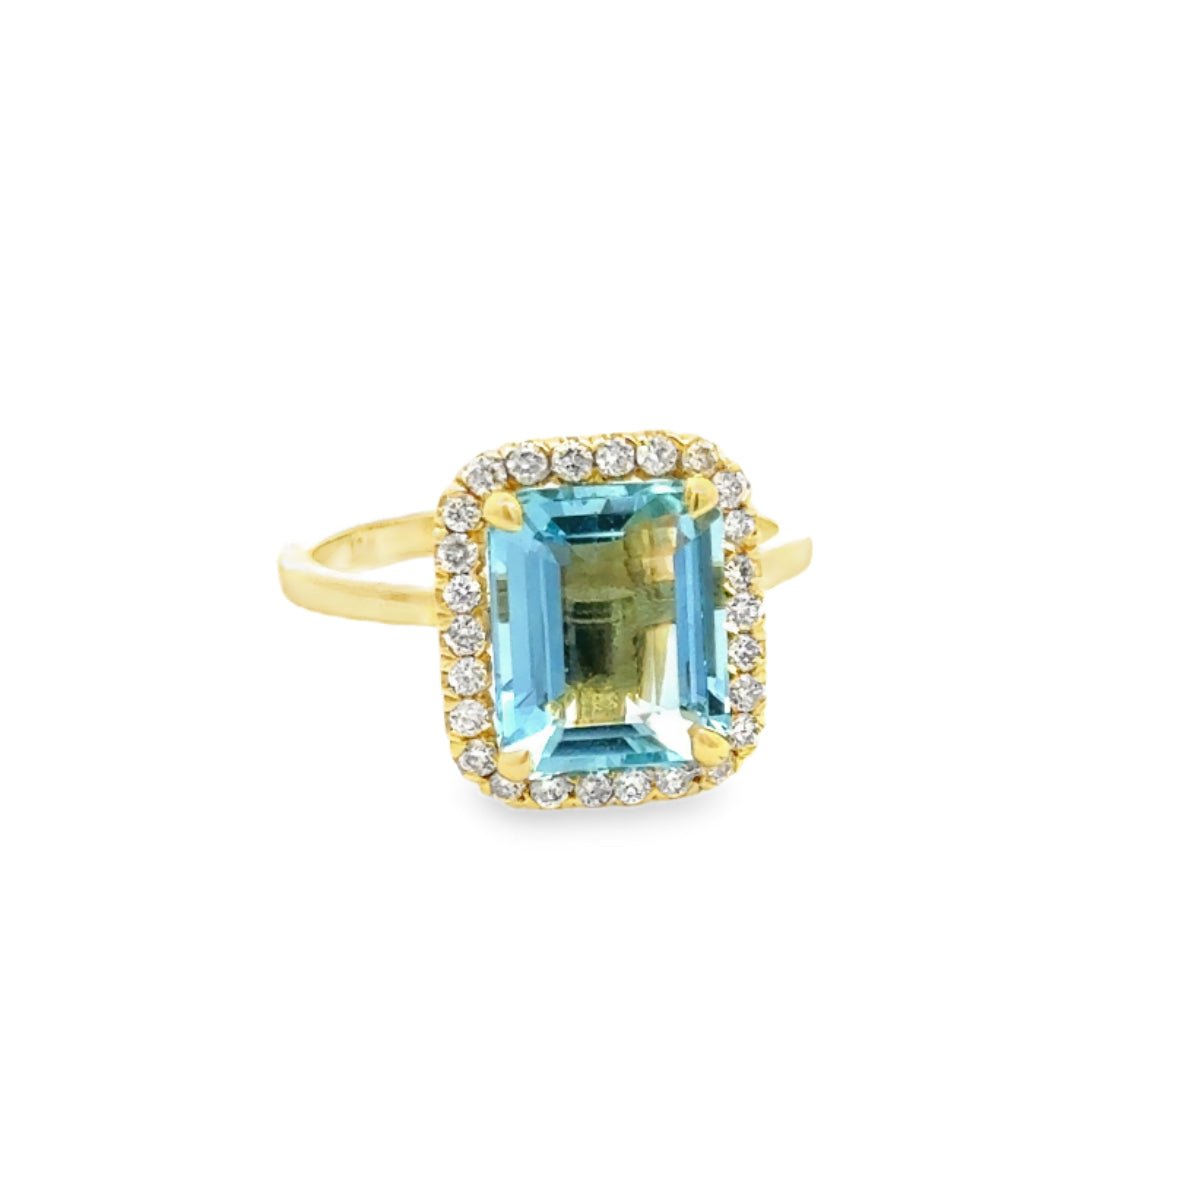 Emerald Cut Aquamarine With Diamond Halo Ring - Kelly Wade Jewelers Store